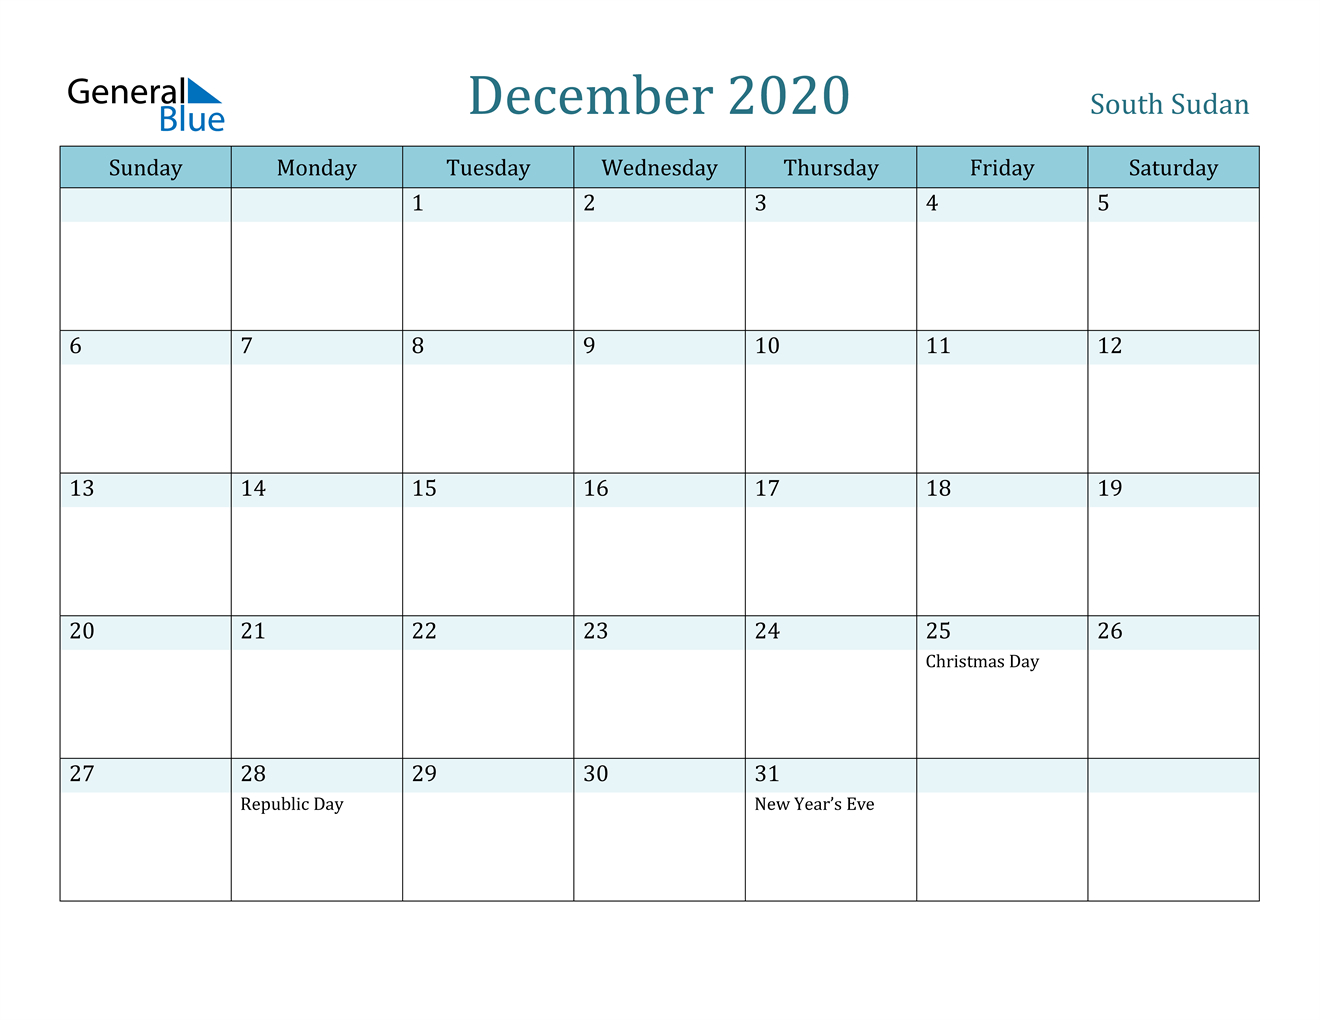 December 2020 Calendar - South Sudan